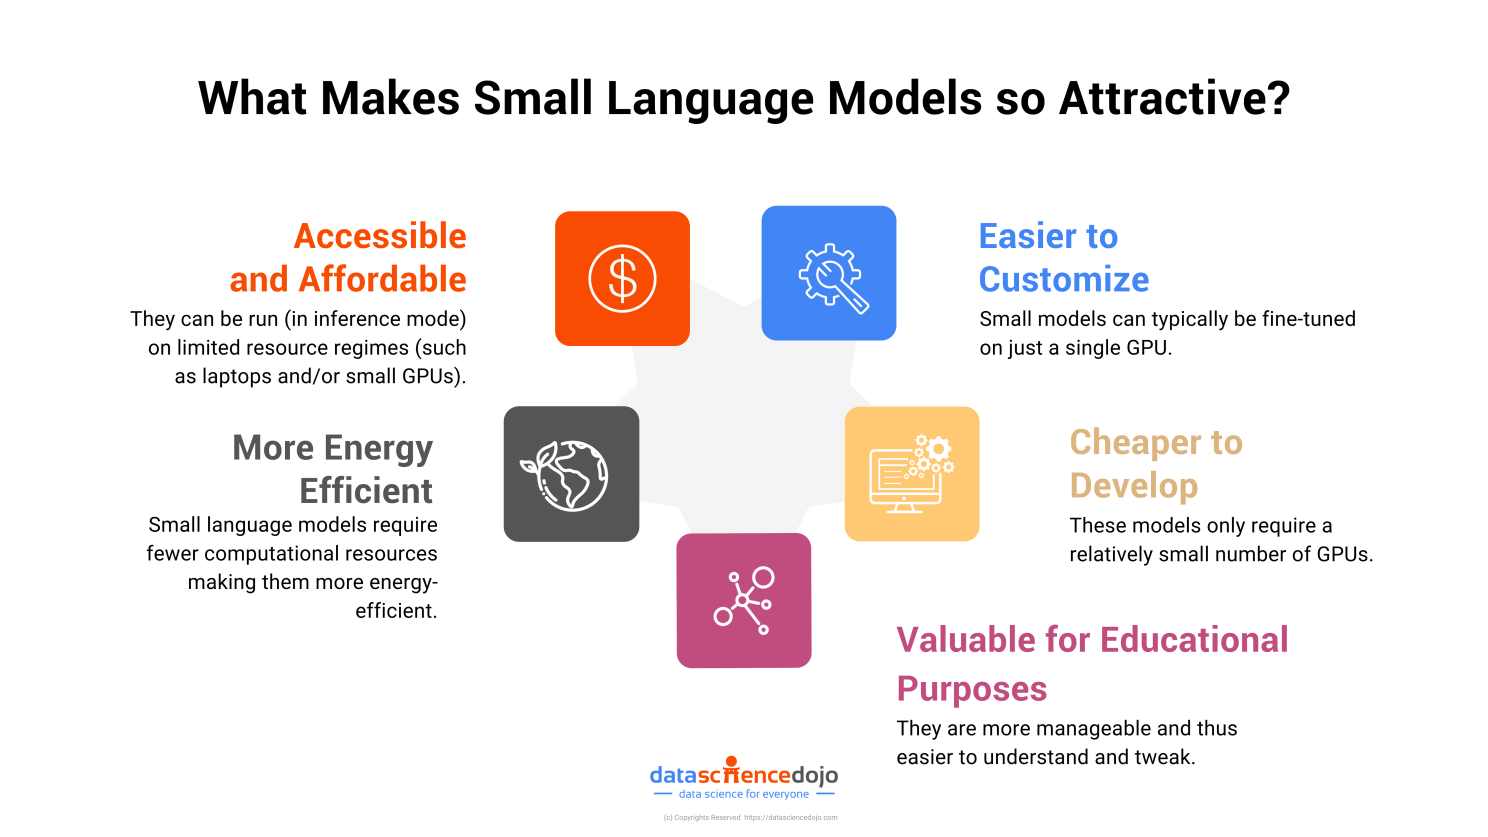 Benefits of Small Language Models